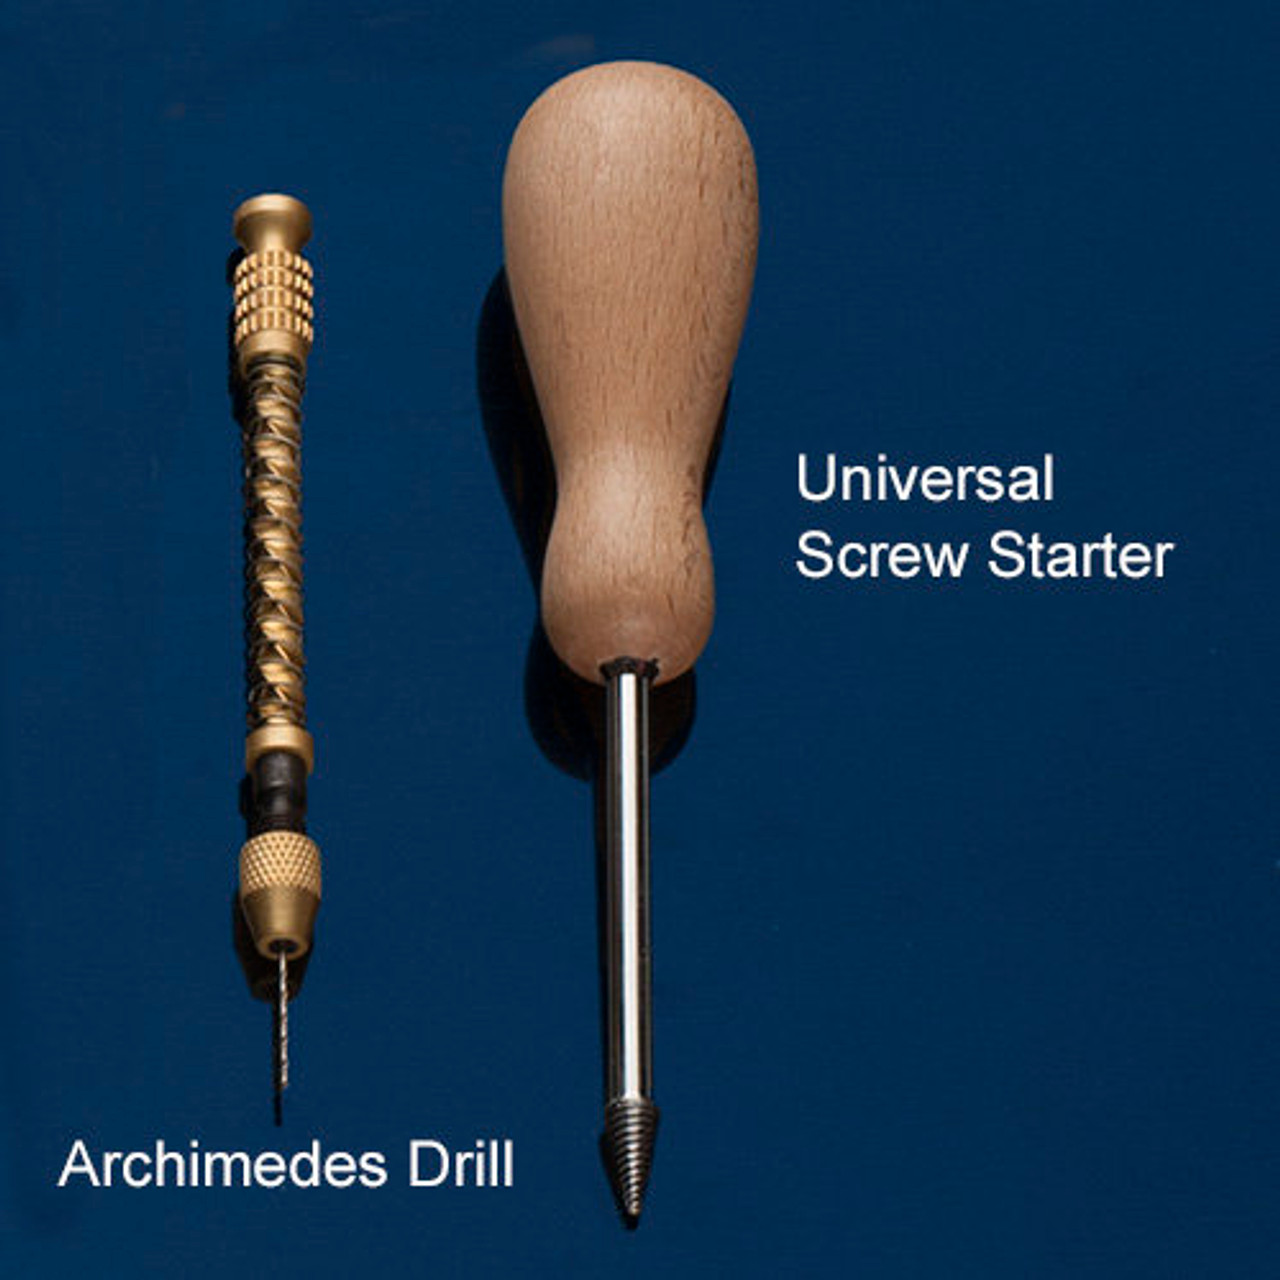 Archimedes Screw Drills, Small Hand Drills